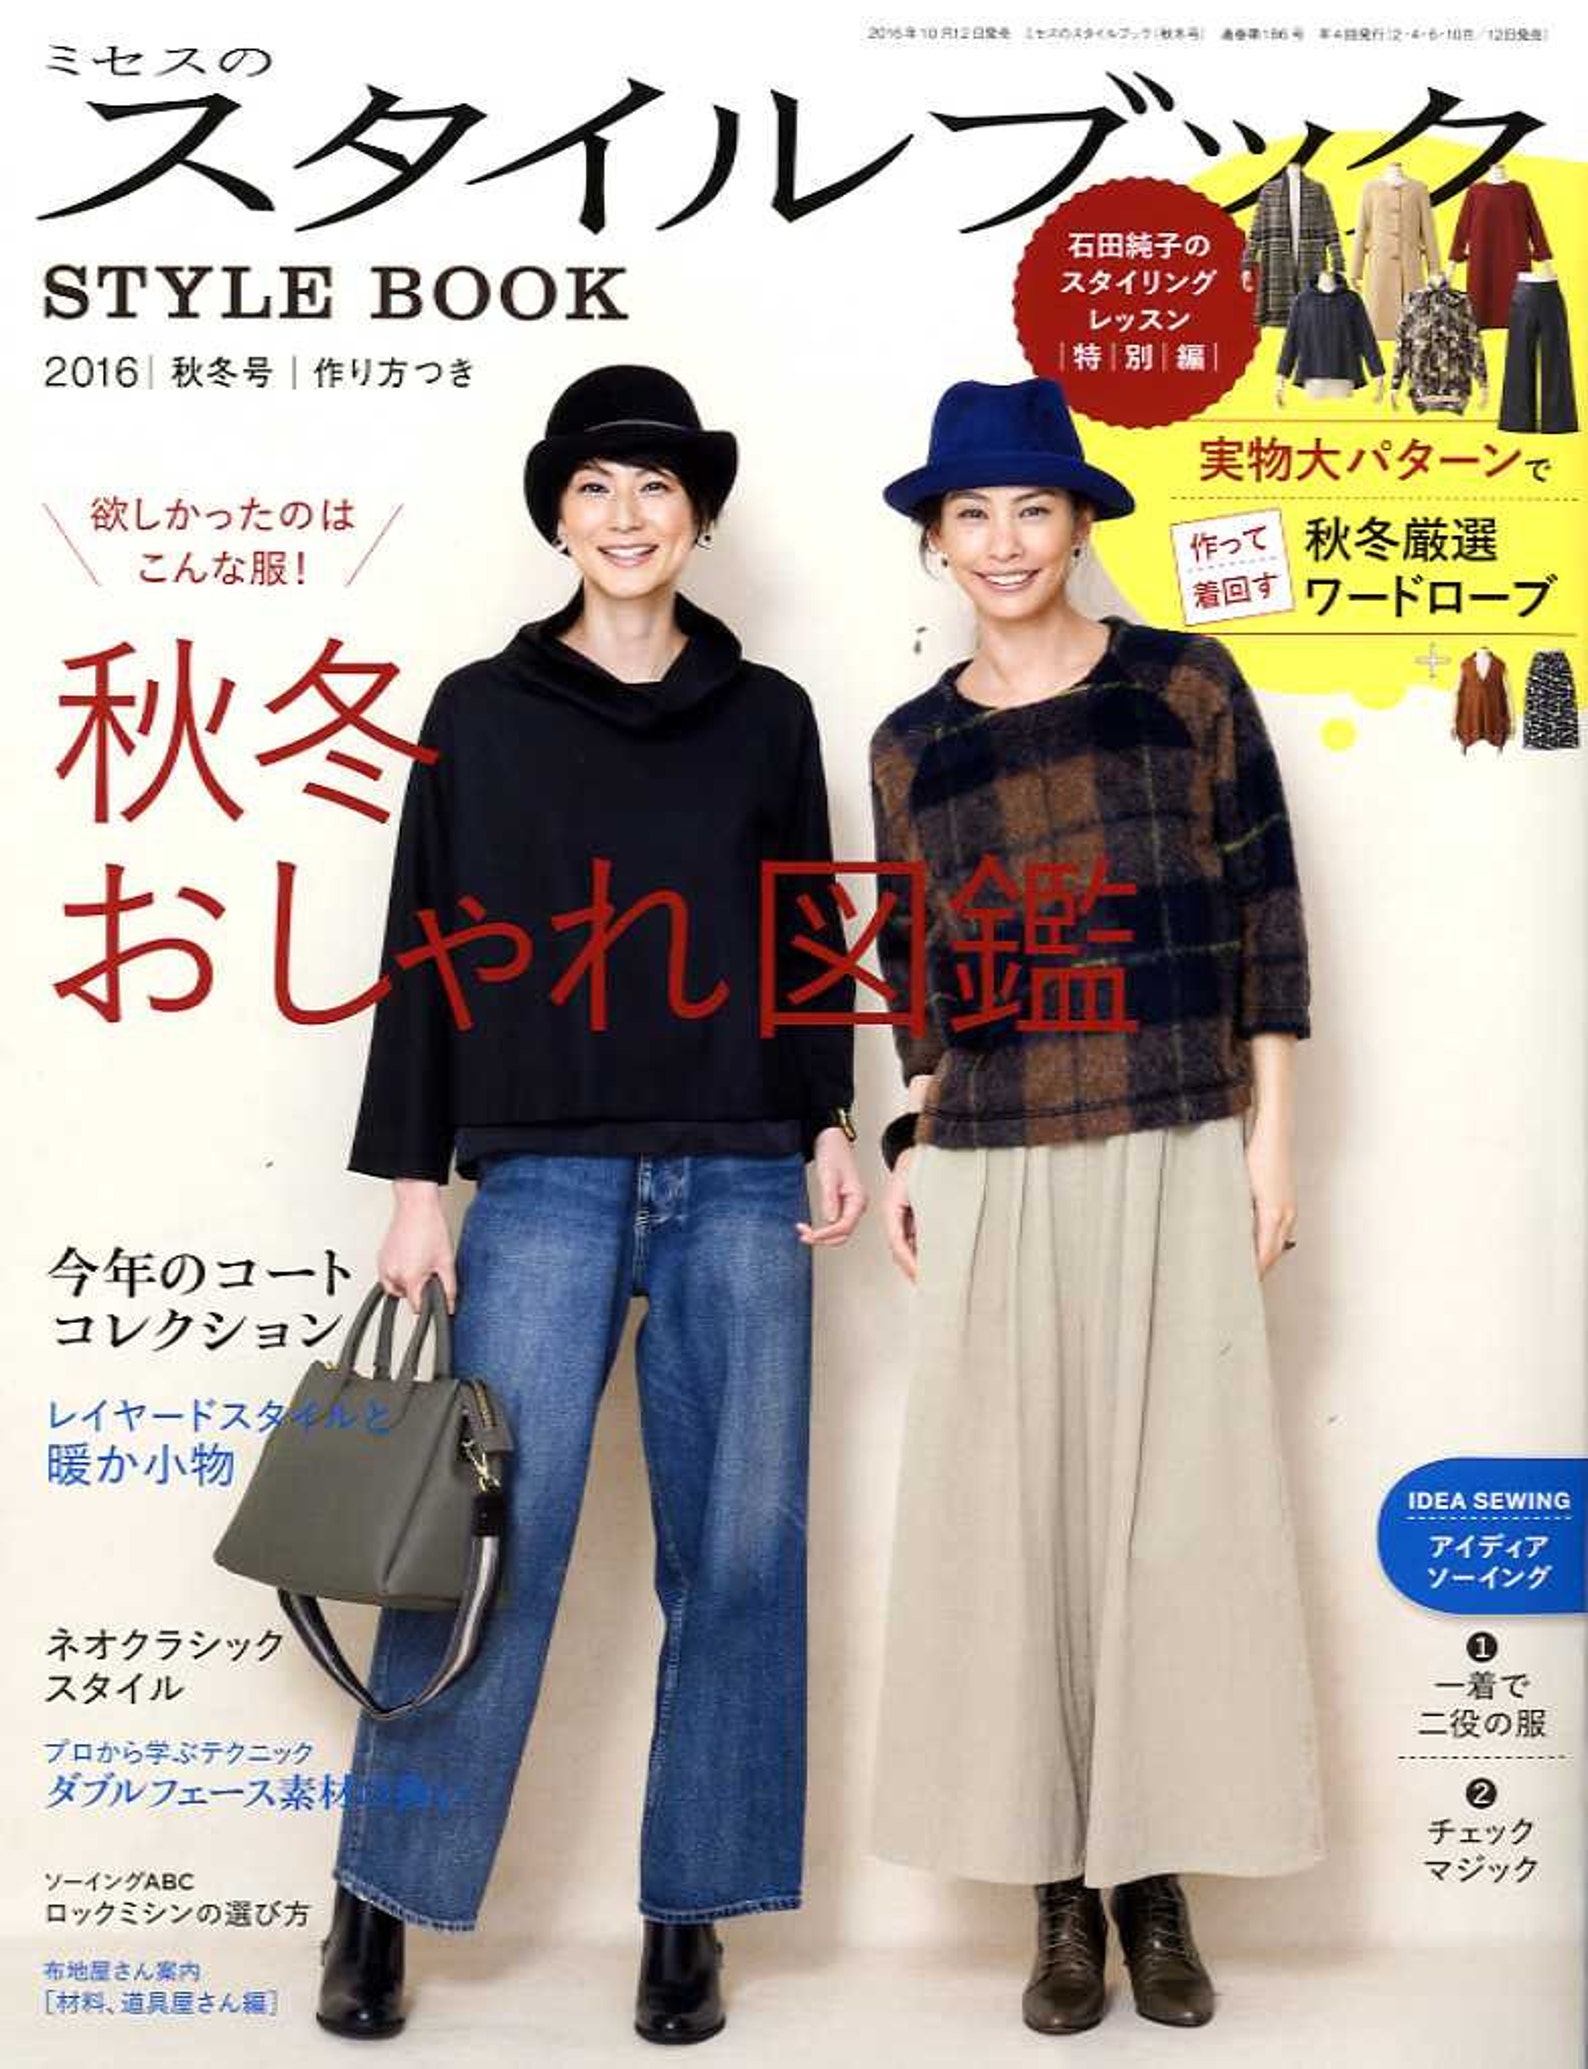 Style book. Mrs Style book 2016. Bookish Style. Mrs Stylebook Winter 2012.